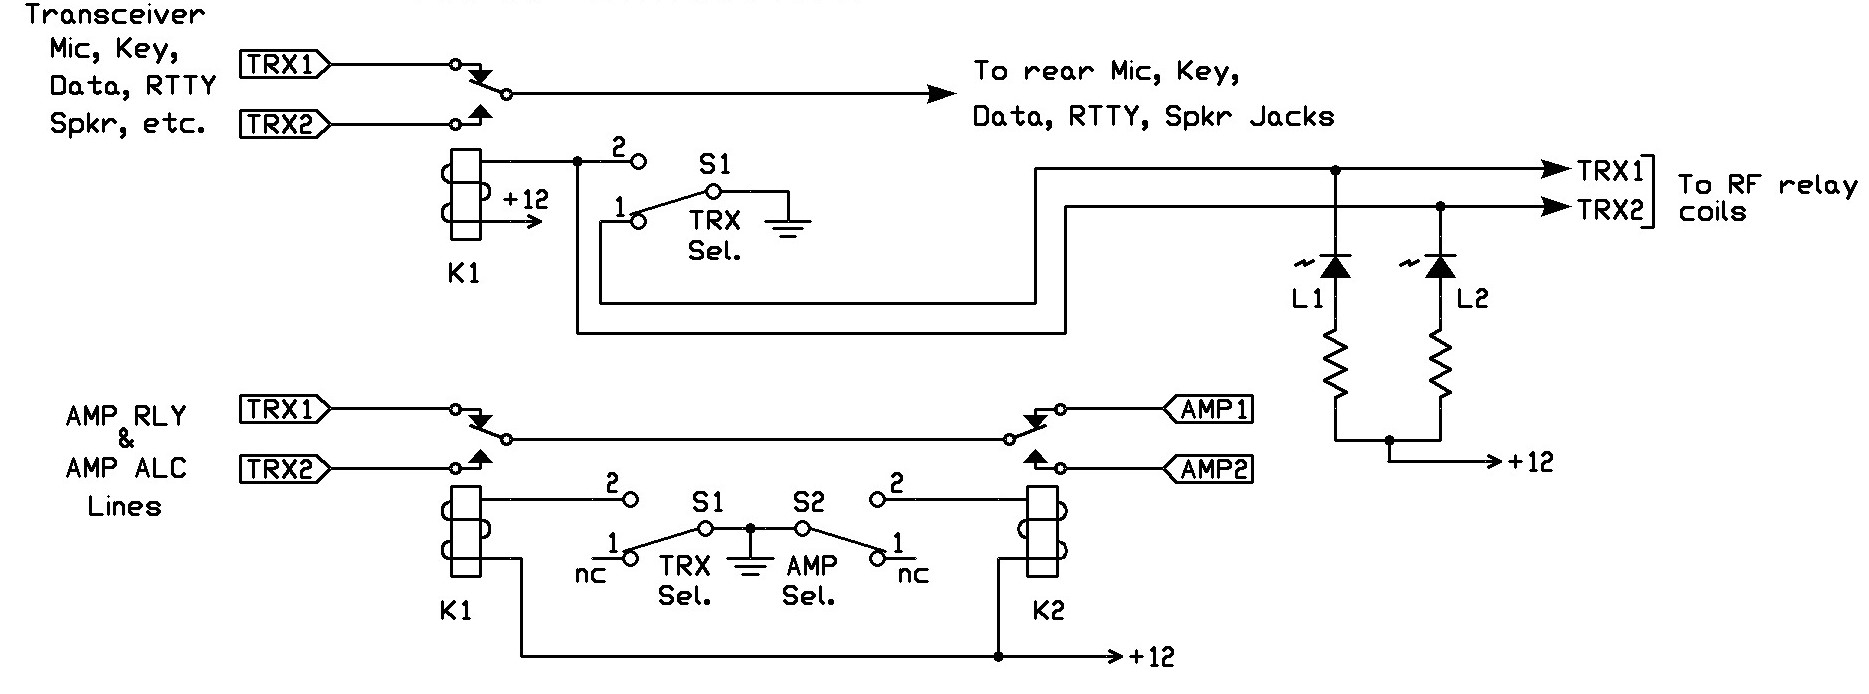 W8ZR Multicontroller Technical Description